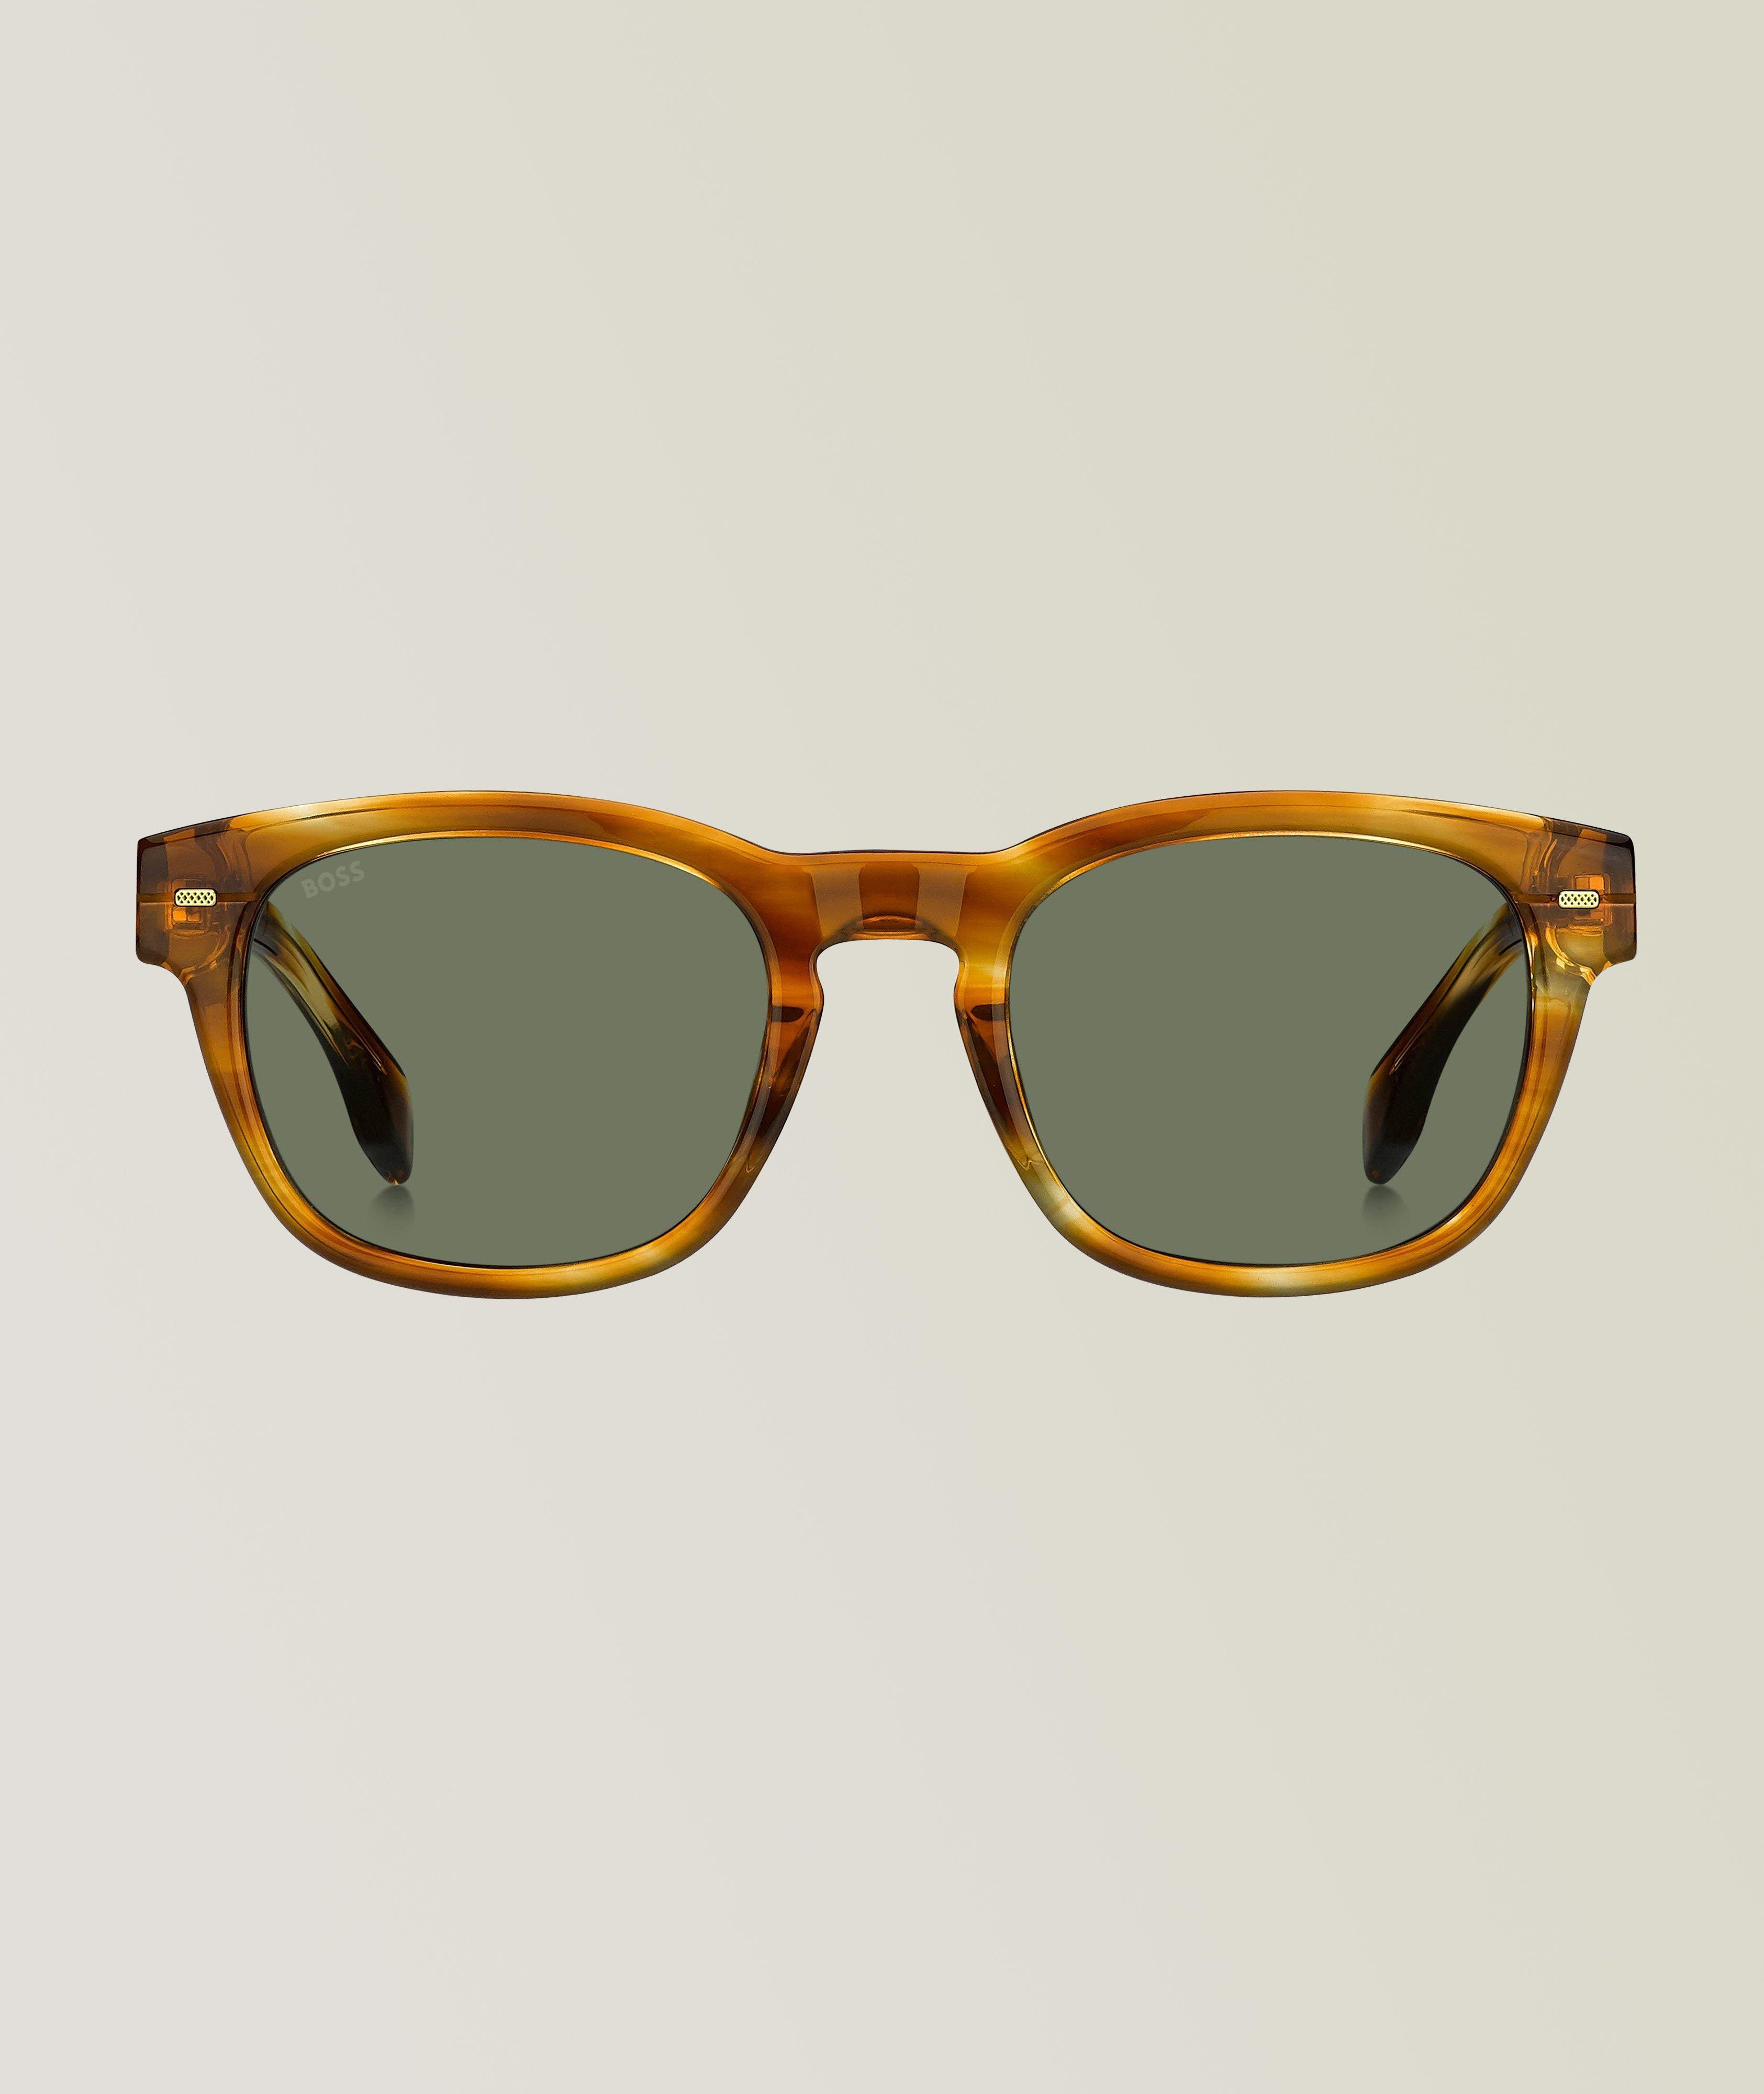 Hugo Boss Brown Sunglasses With Green Lenses image 0